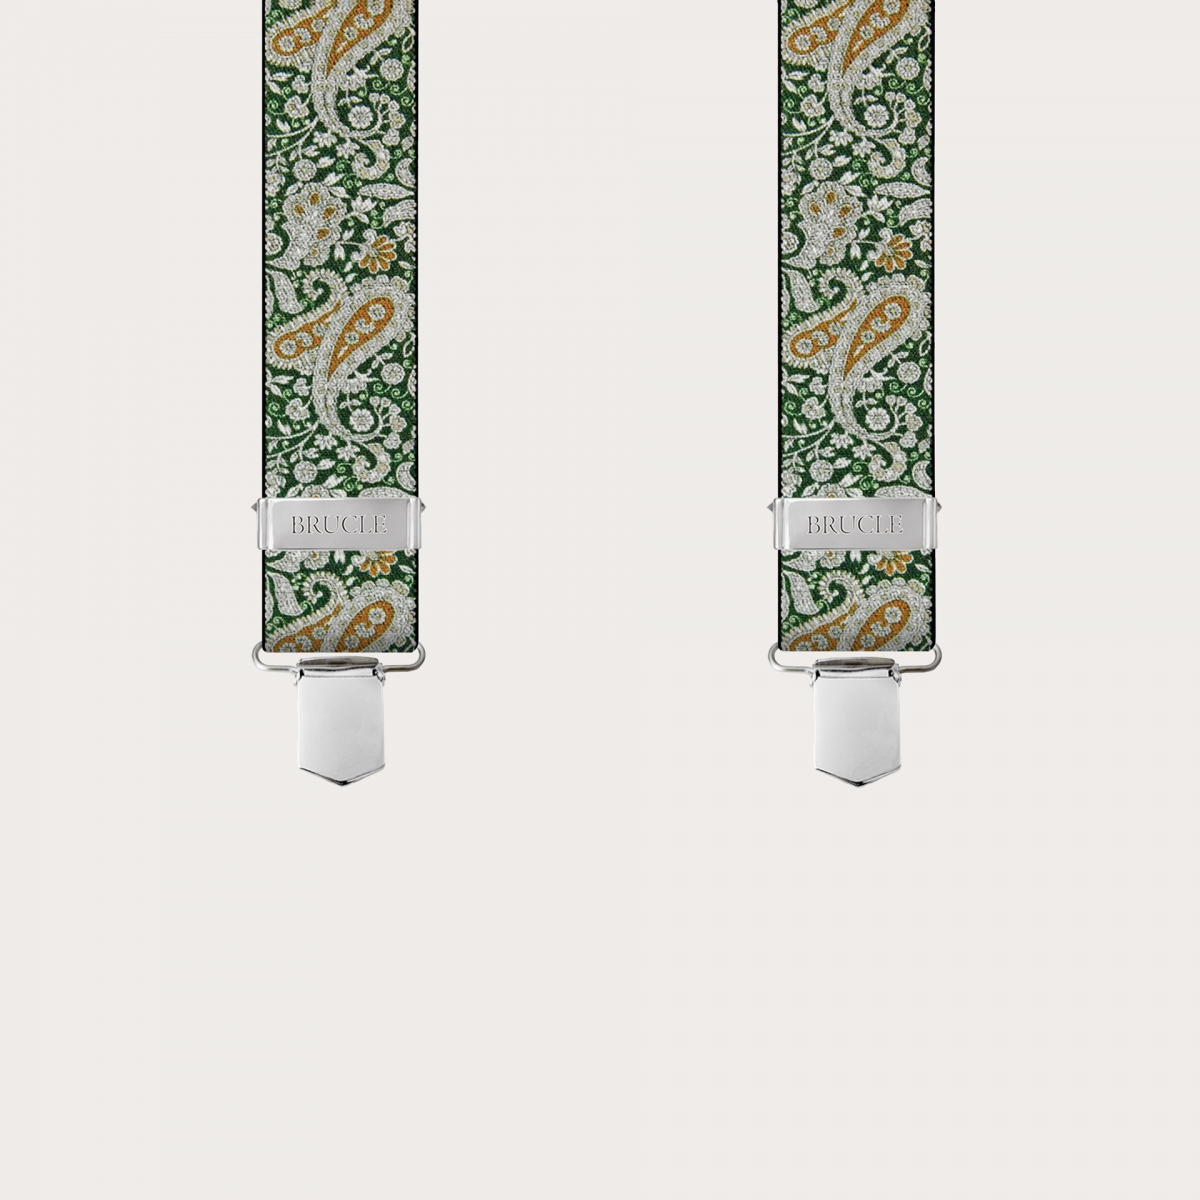 BRUCLE X-form Hosenträger mit Clips in grünes und goldenes Kaschmirmuster